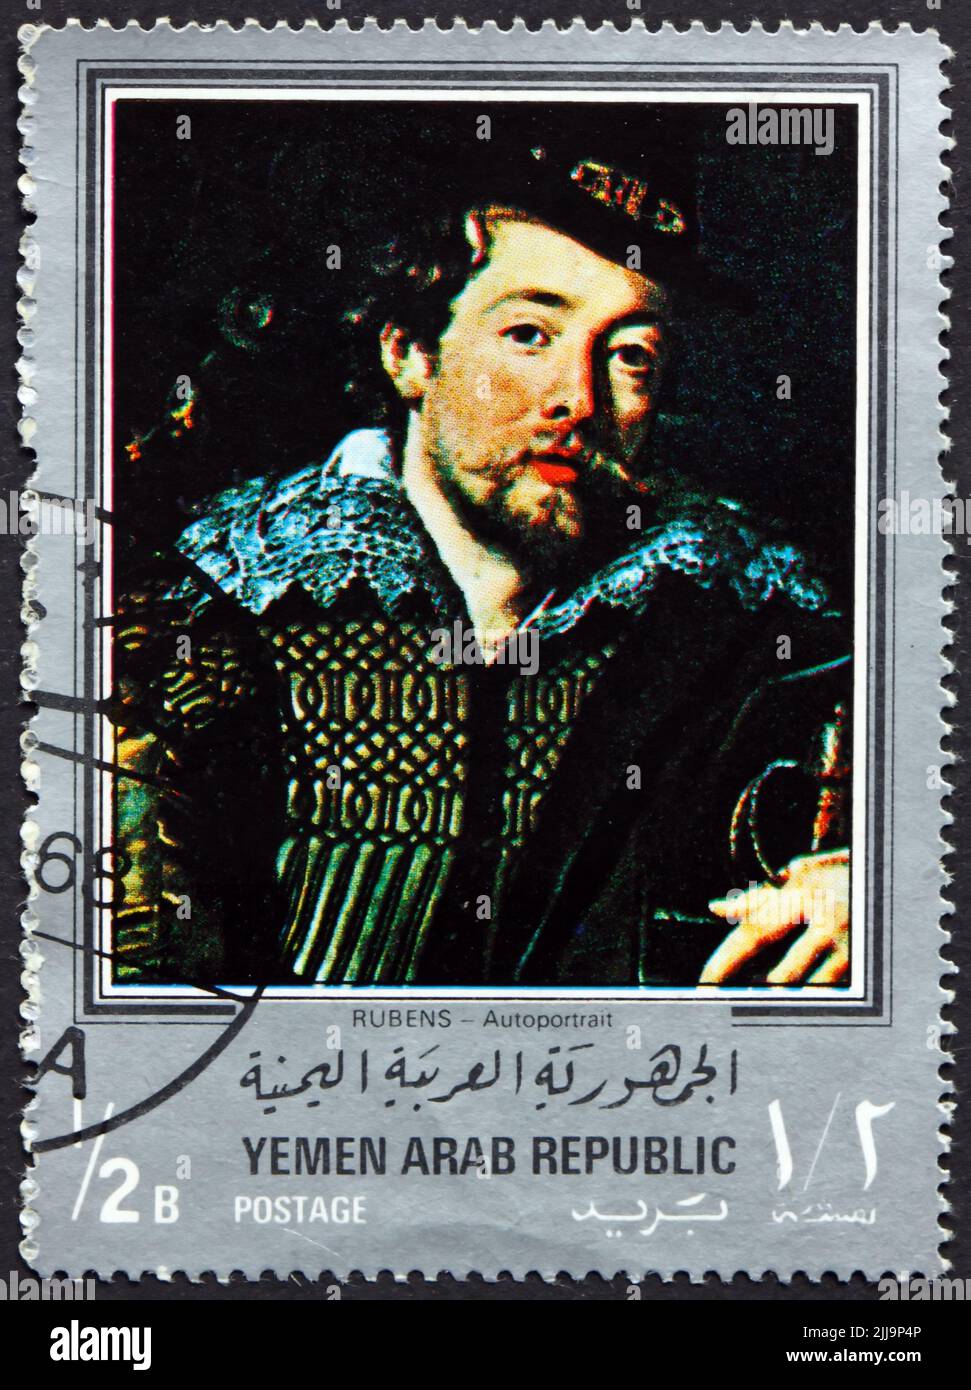 YEMEN - CIRCA 1968: a stamp printed in the Yemen Arab Republic shows Rubens autoportrait, Painting by Rubens, Flemish Painter, circa 1968 Stock Photo